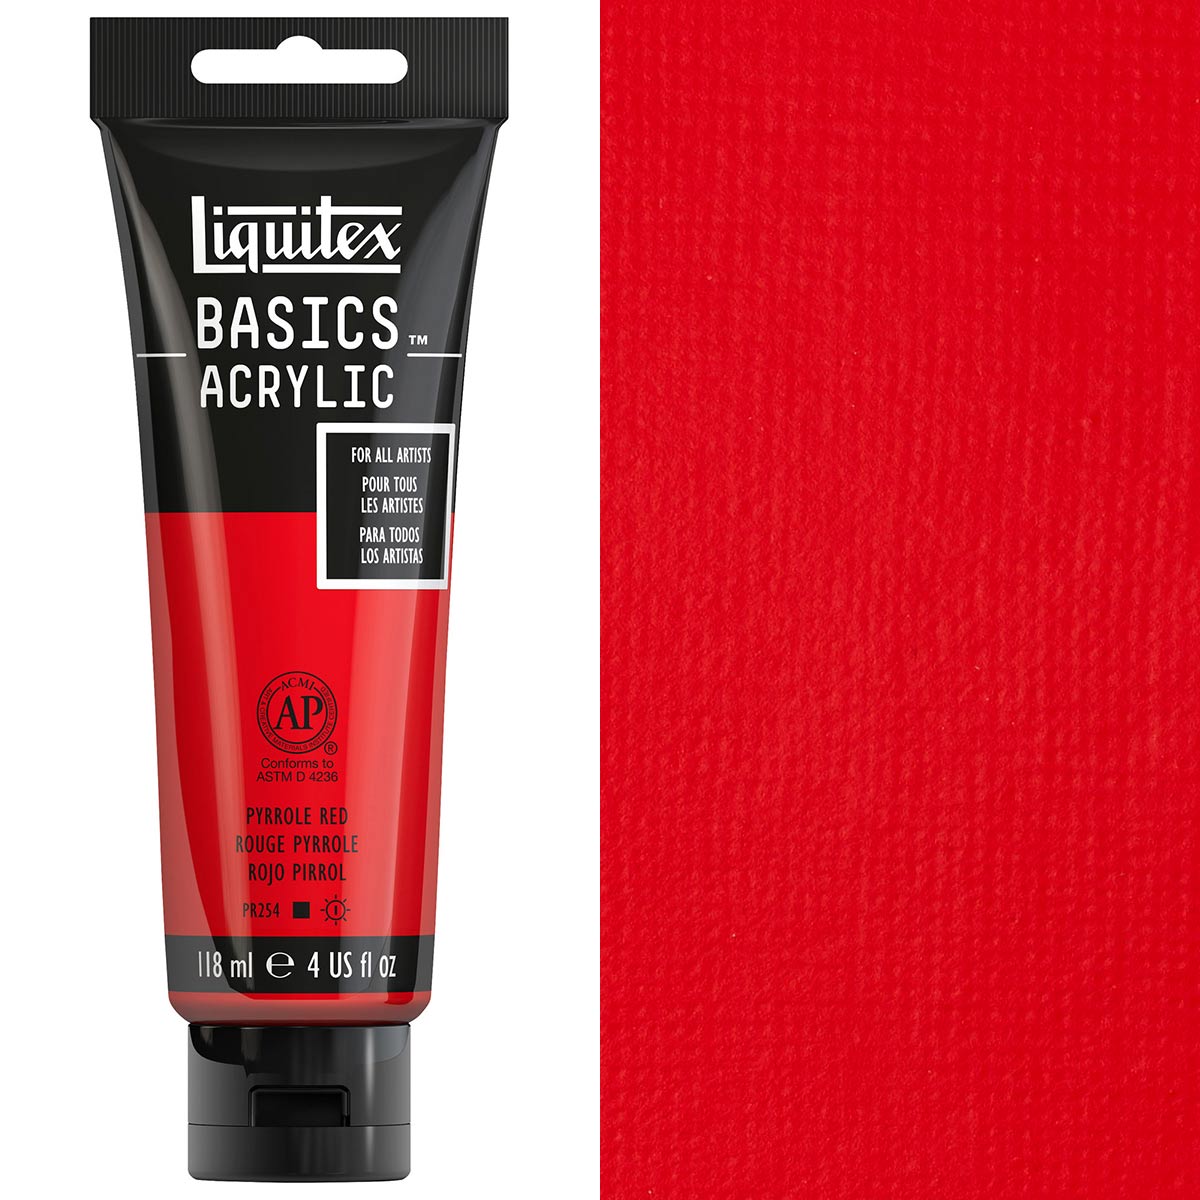 Liquitex - Basics Acrylic Colour - 118ml - Pyrrole Red